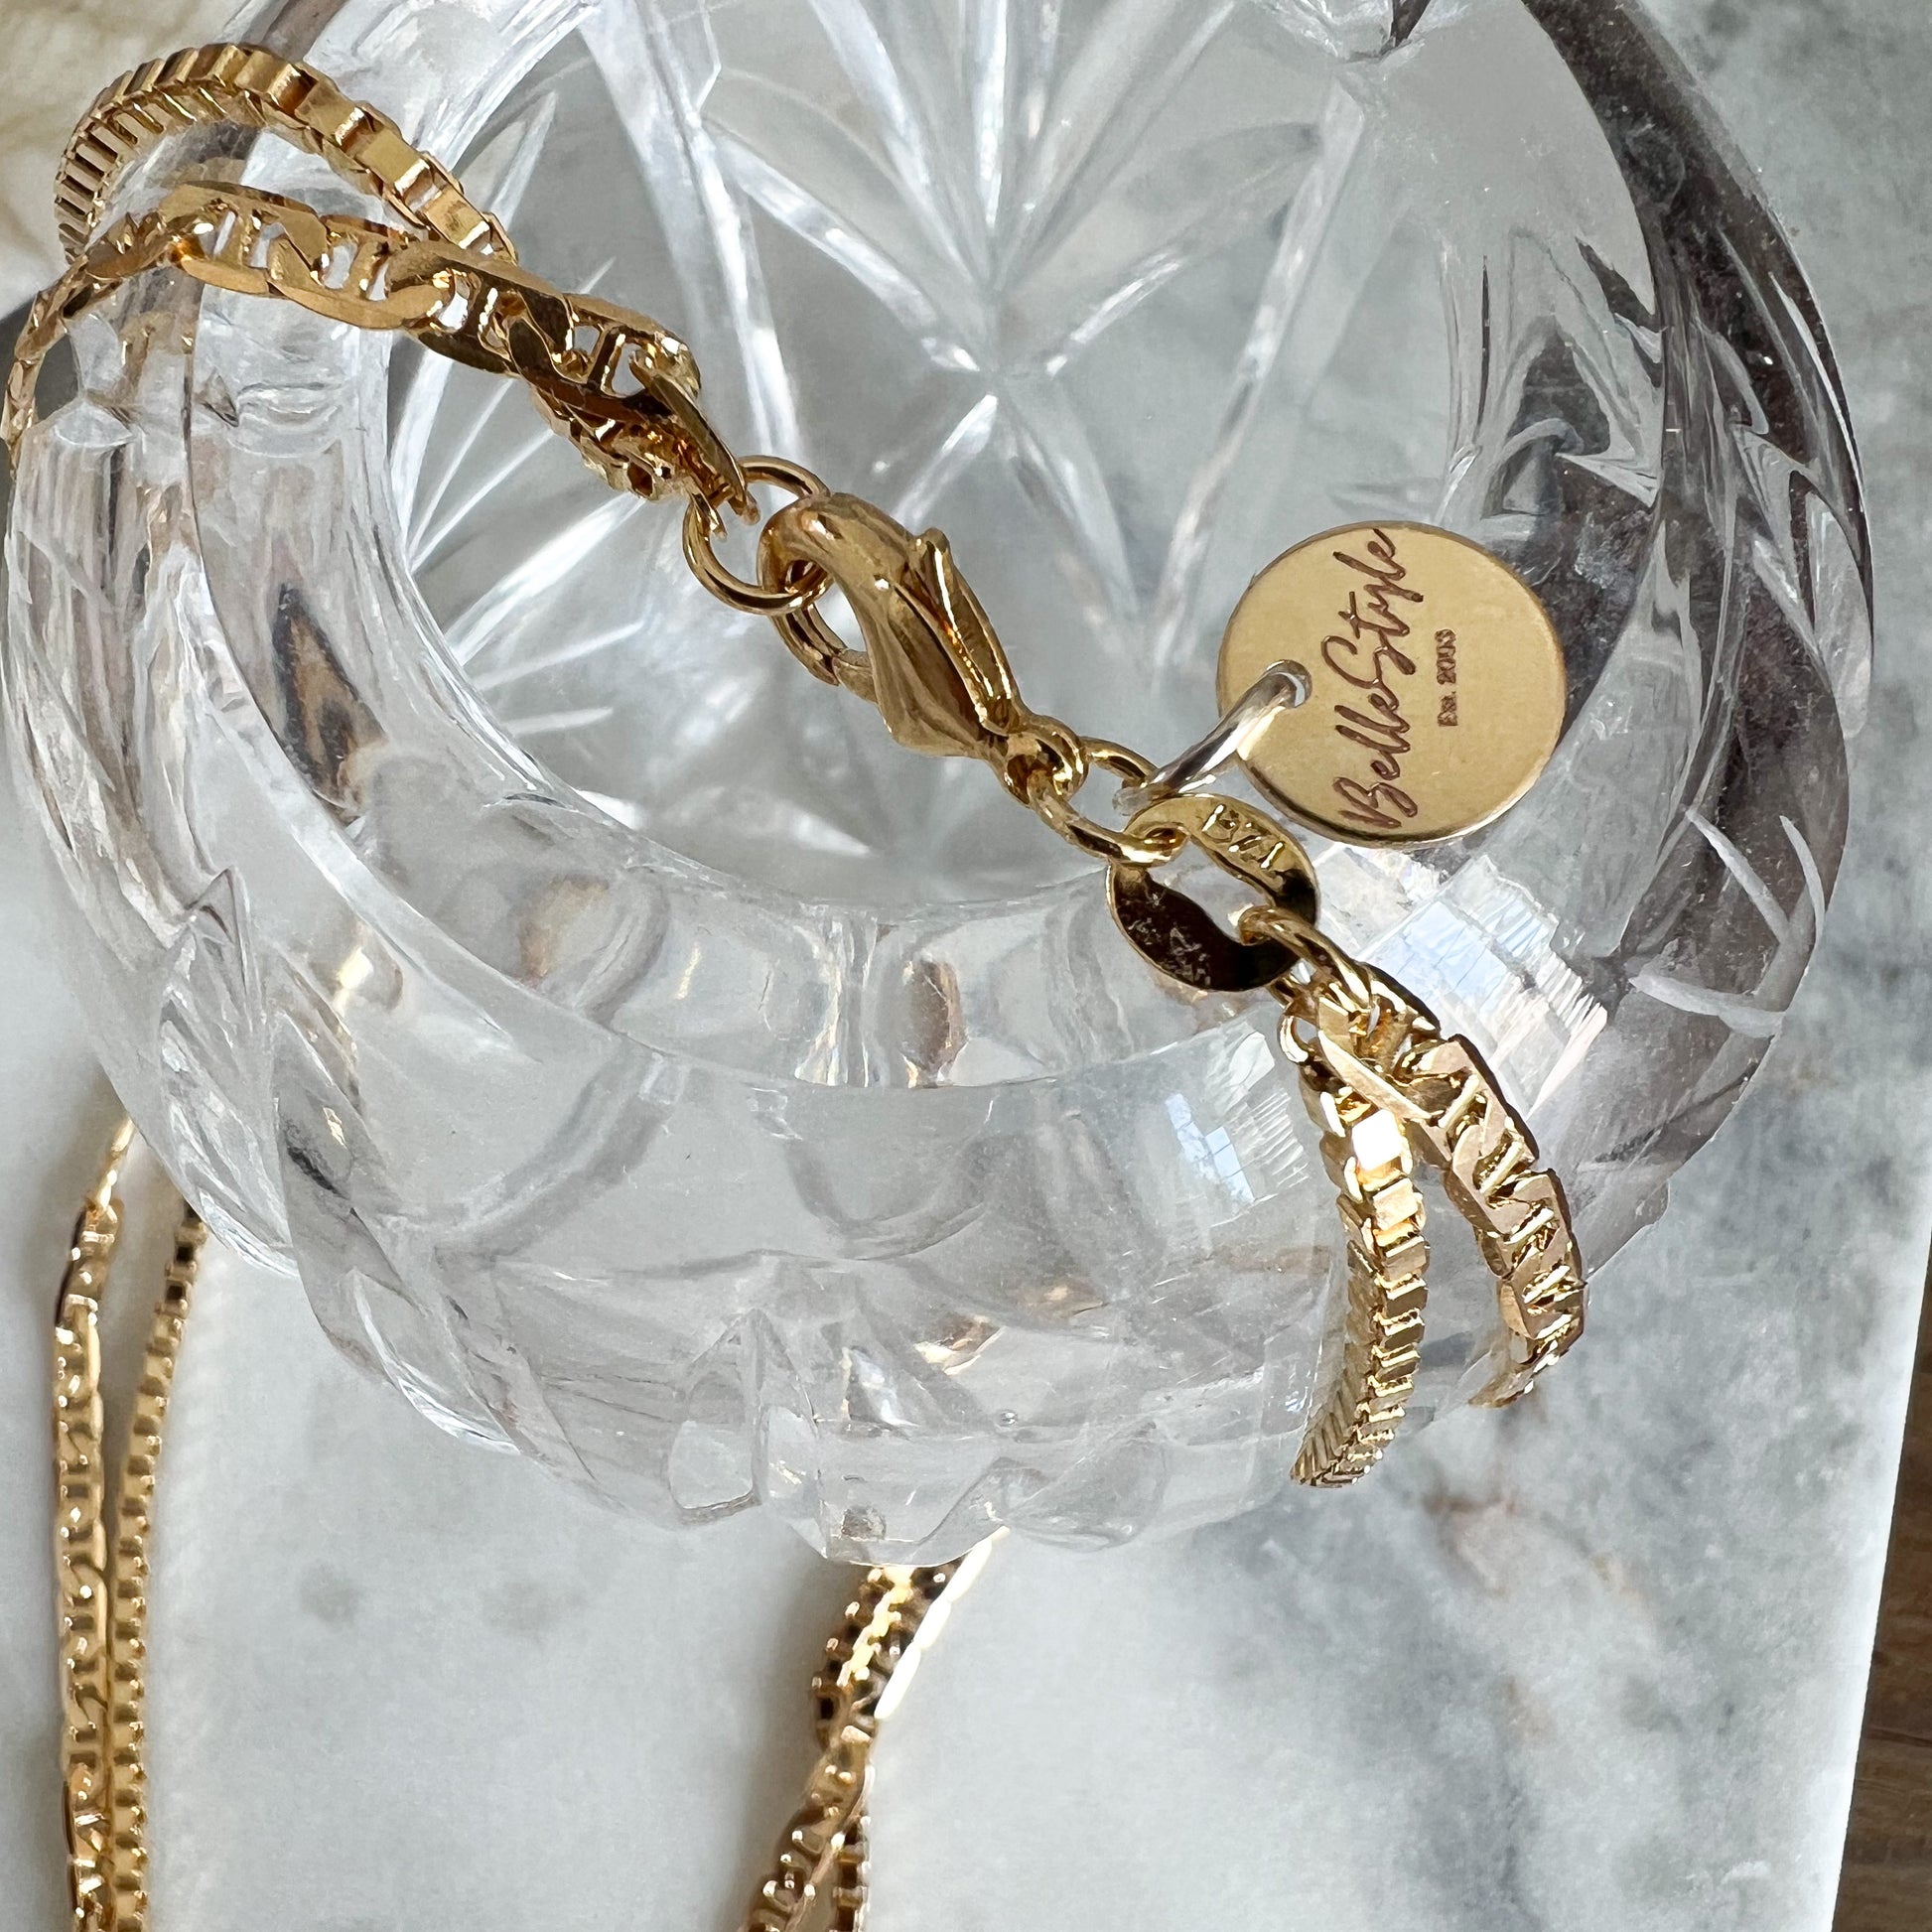 Flynn Park Double Chain Gold Necklace - BelleStyle